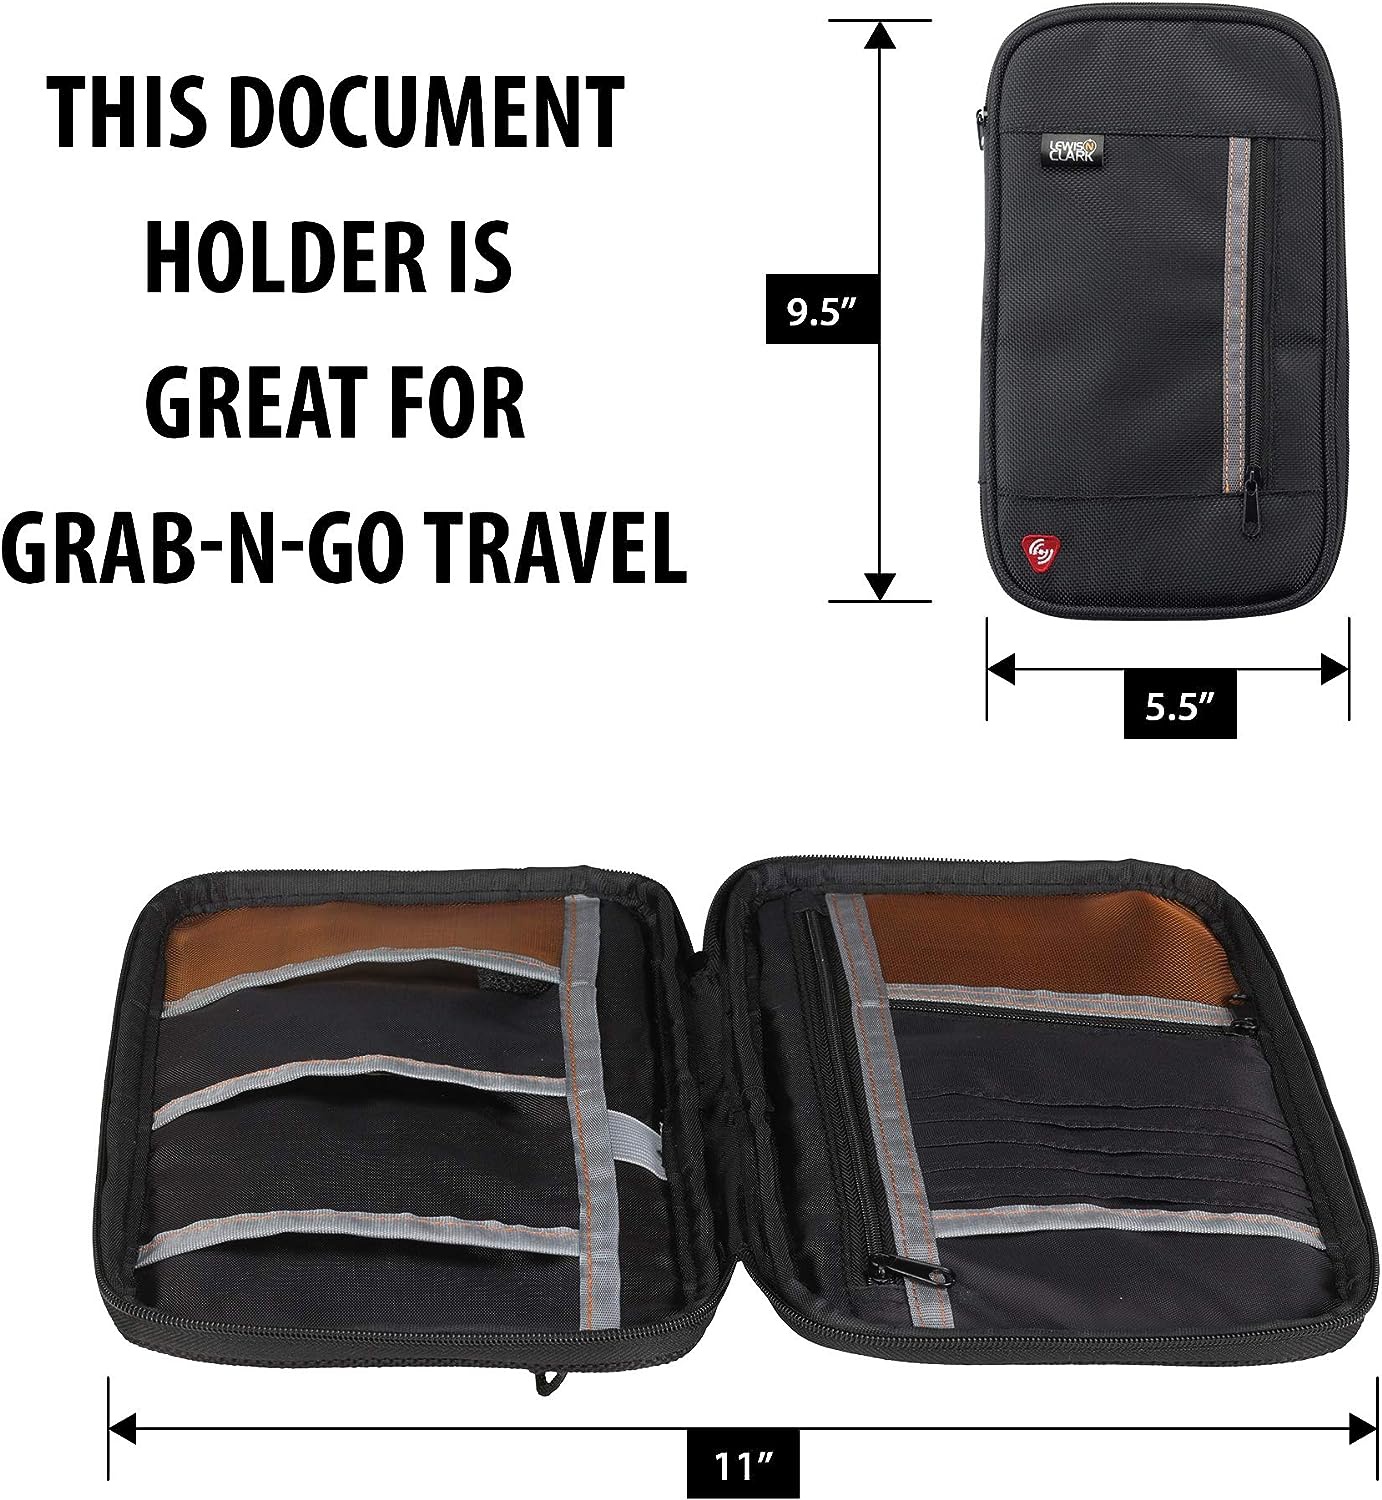 Black RFID Document Organizer for Luggage - Size: One Size (1248)